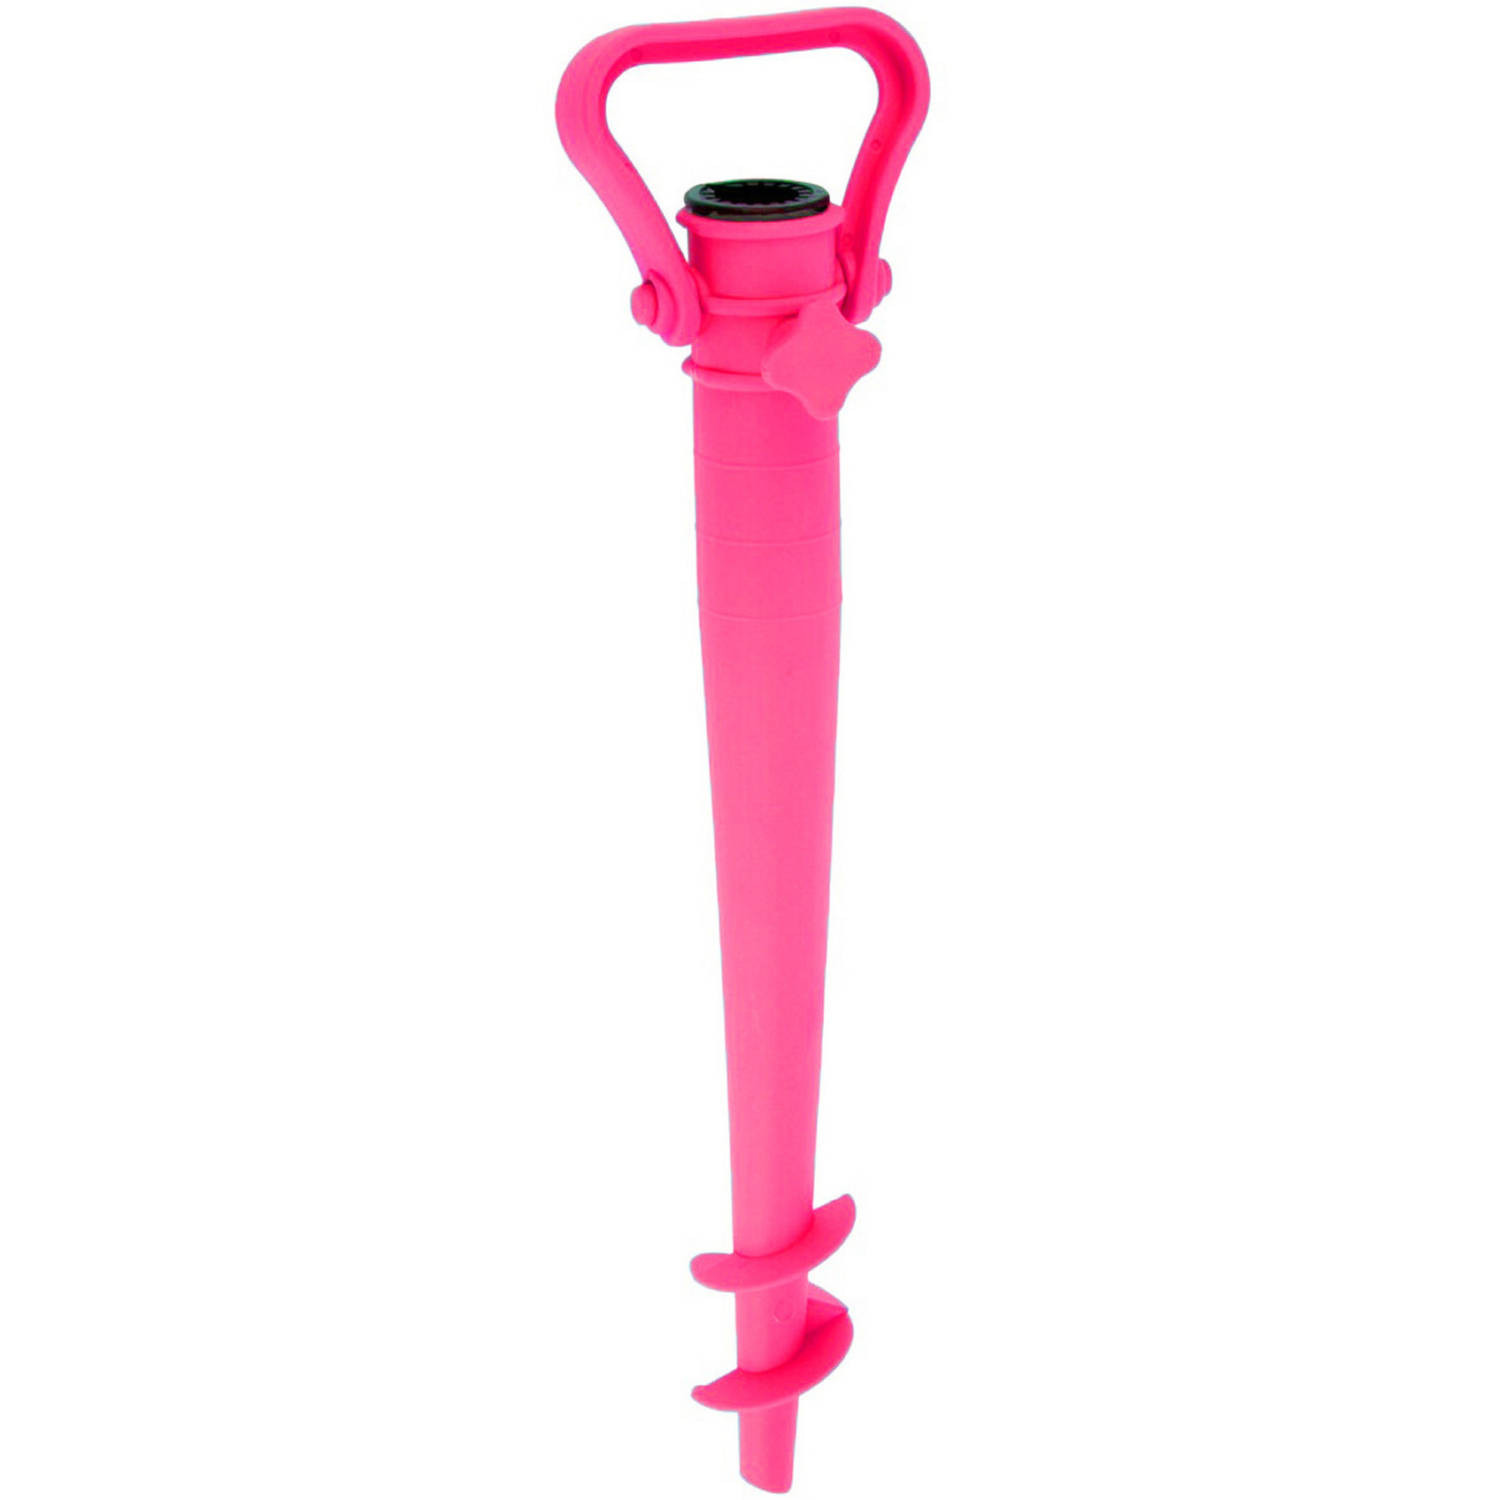 Parasolharing - roze - kunststof - D35 mm x H39 cm - draaischroef - Parasolvoeten